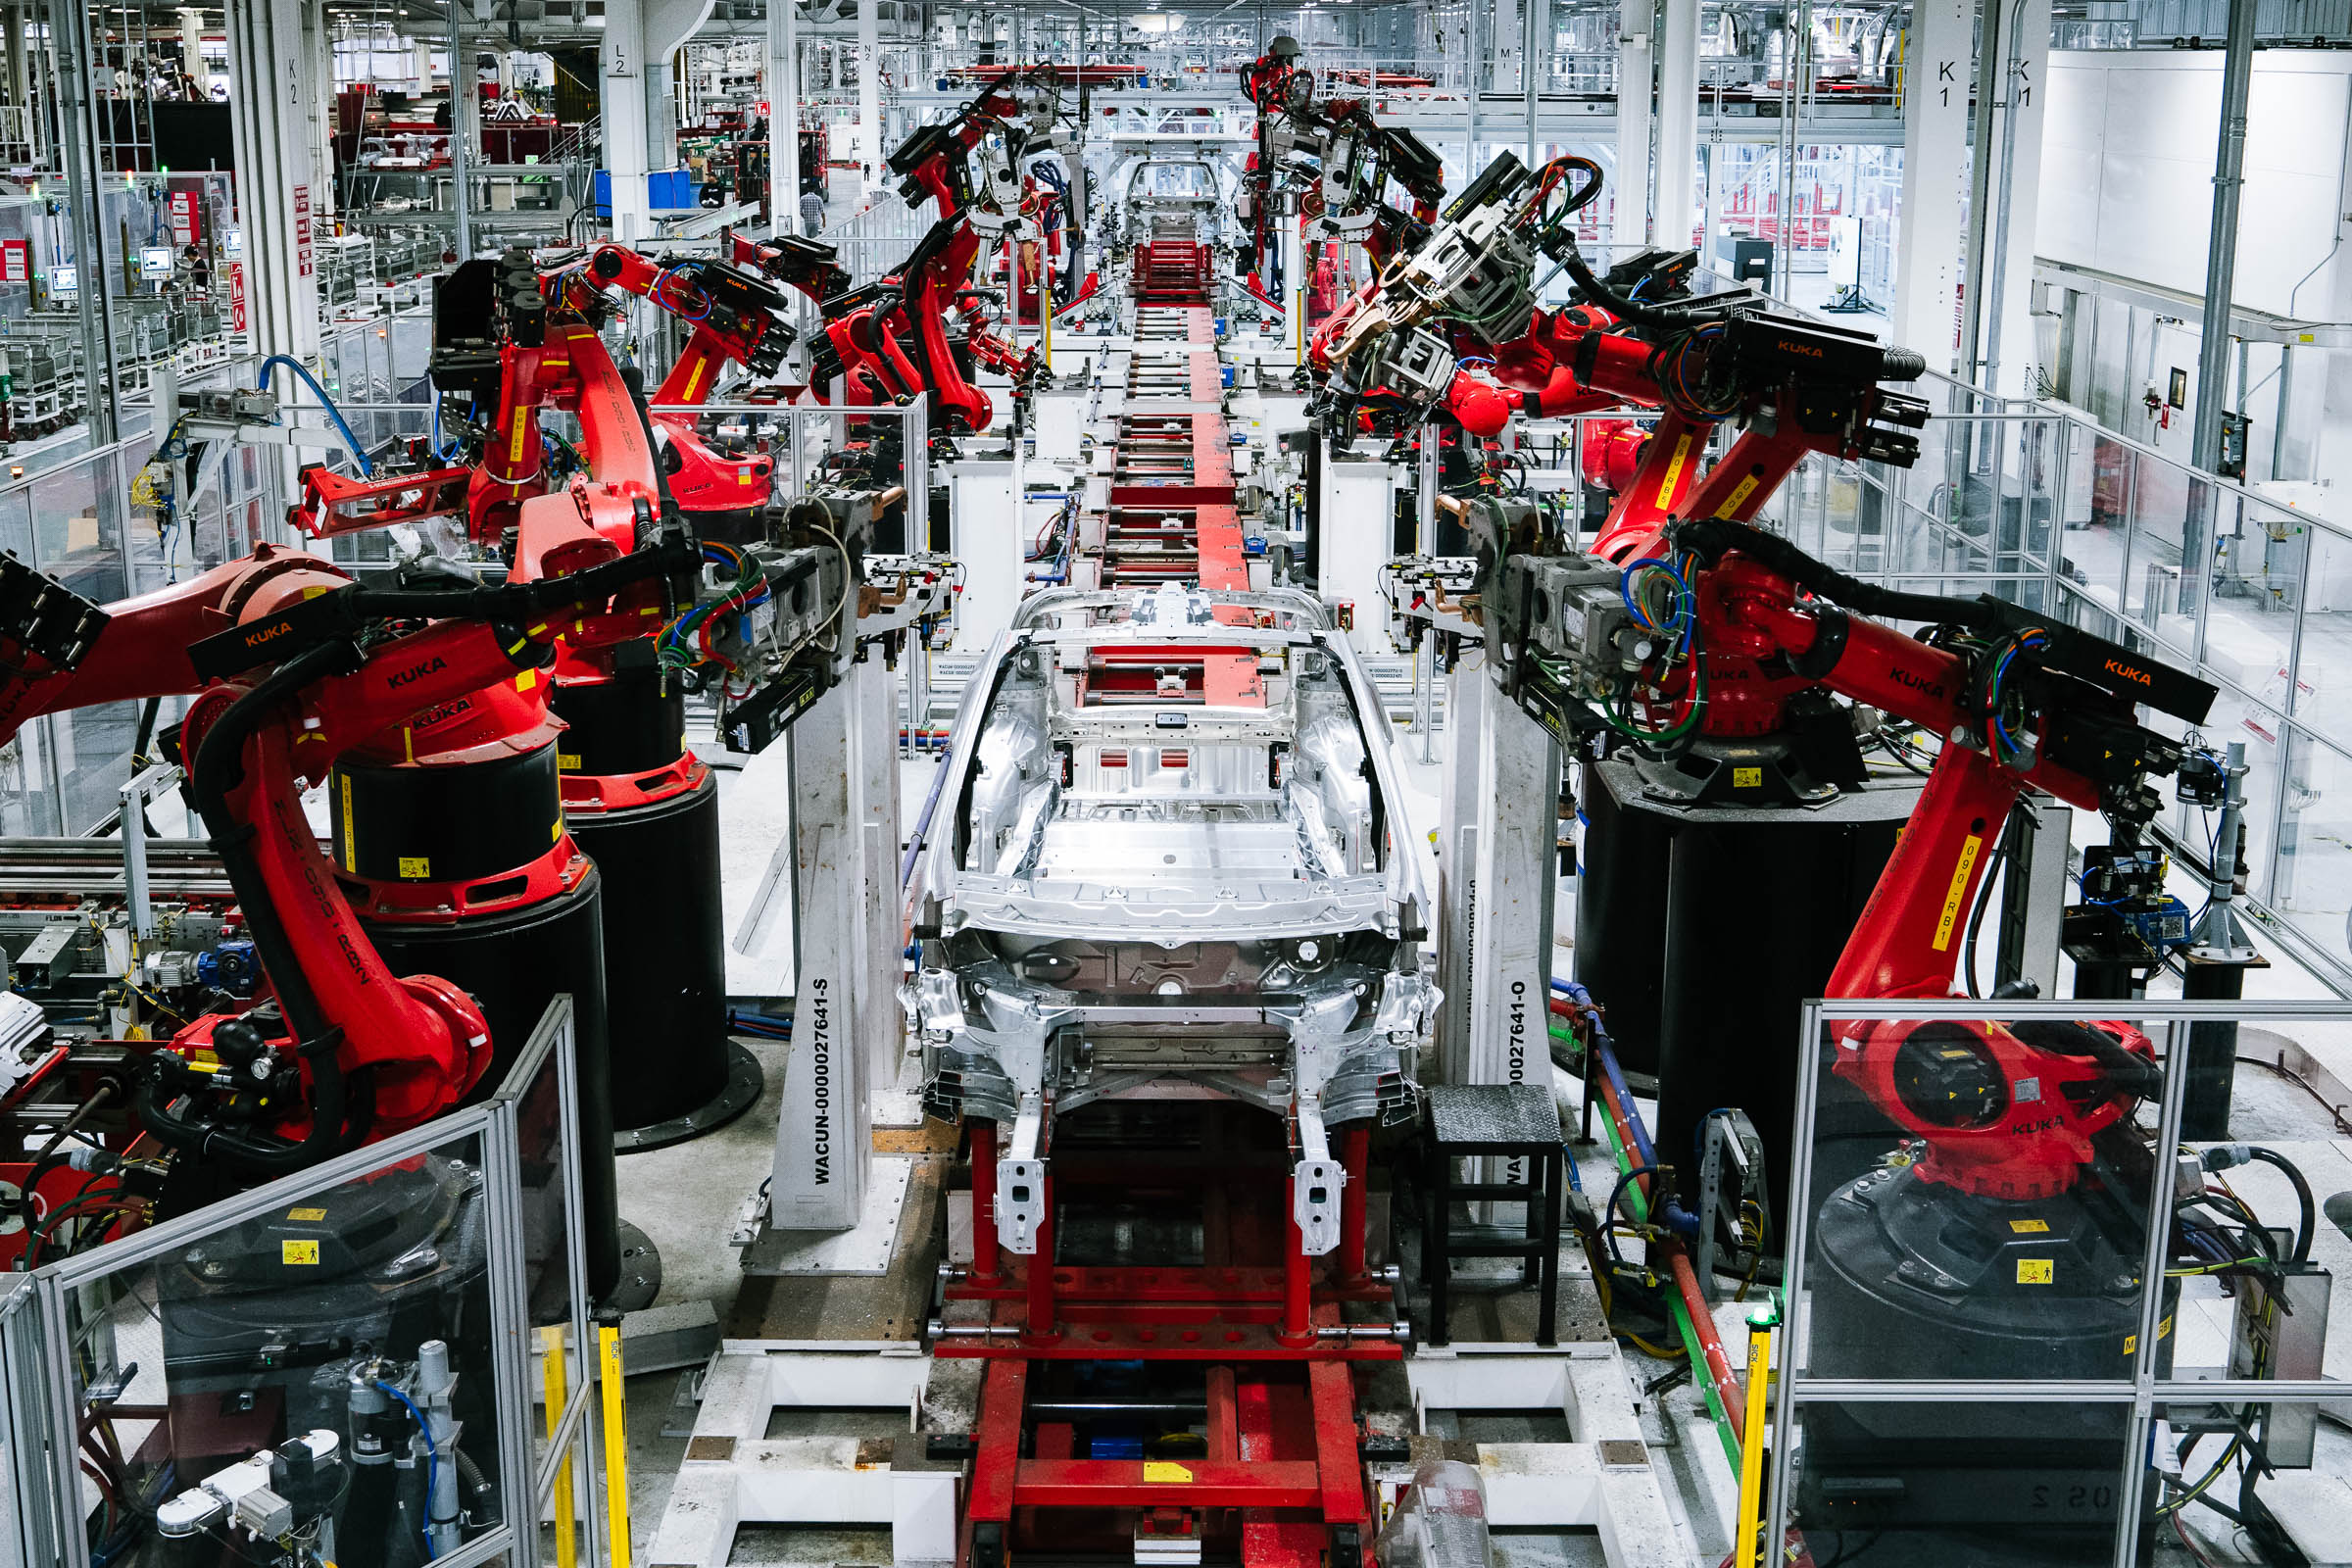 Tesla Fremont factory tours will restart "in a few months" Elon Musk